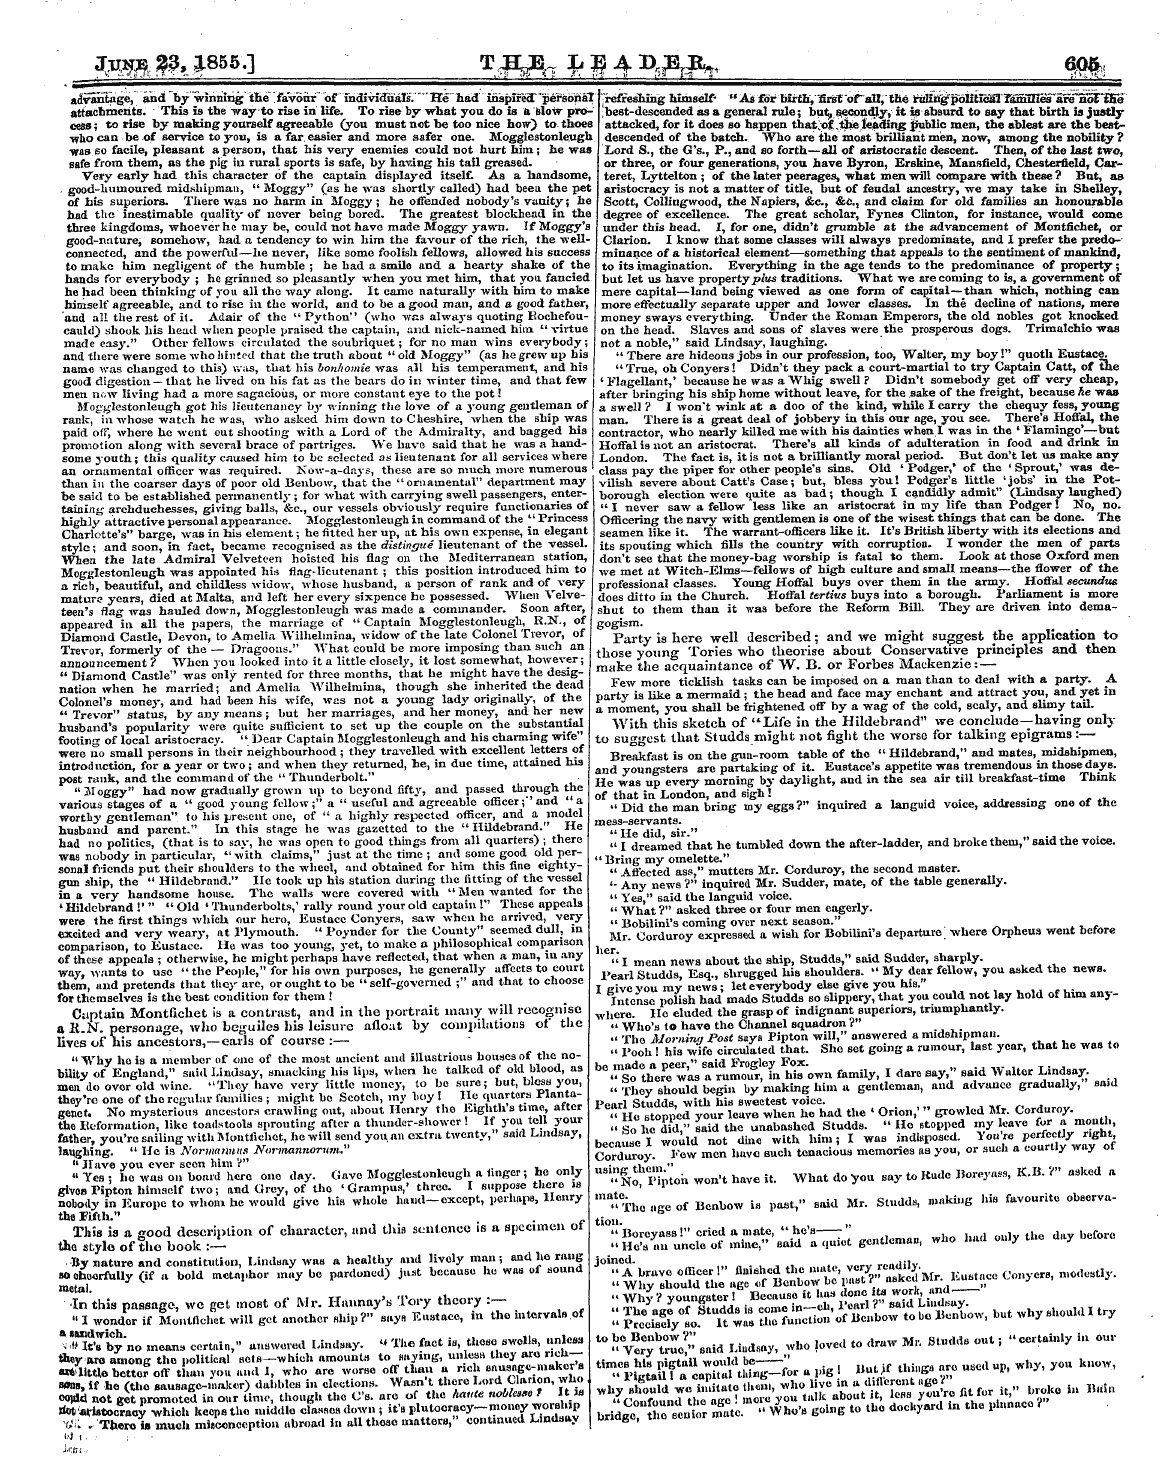 Leader (1850-1860): jS F Y, 2nd edition - 3 Sv M ^,L855.-I Tm^ Frbajyyty,, 6q&